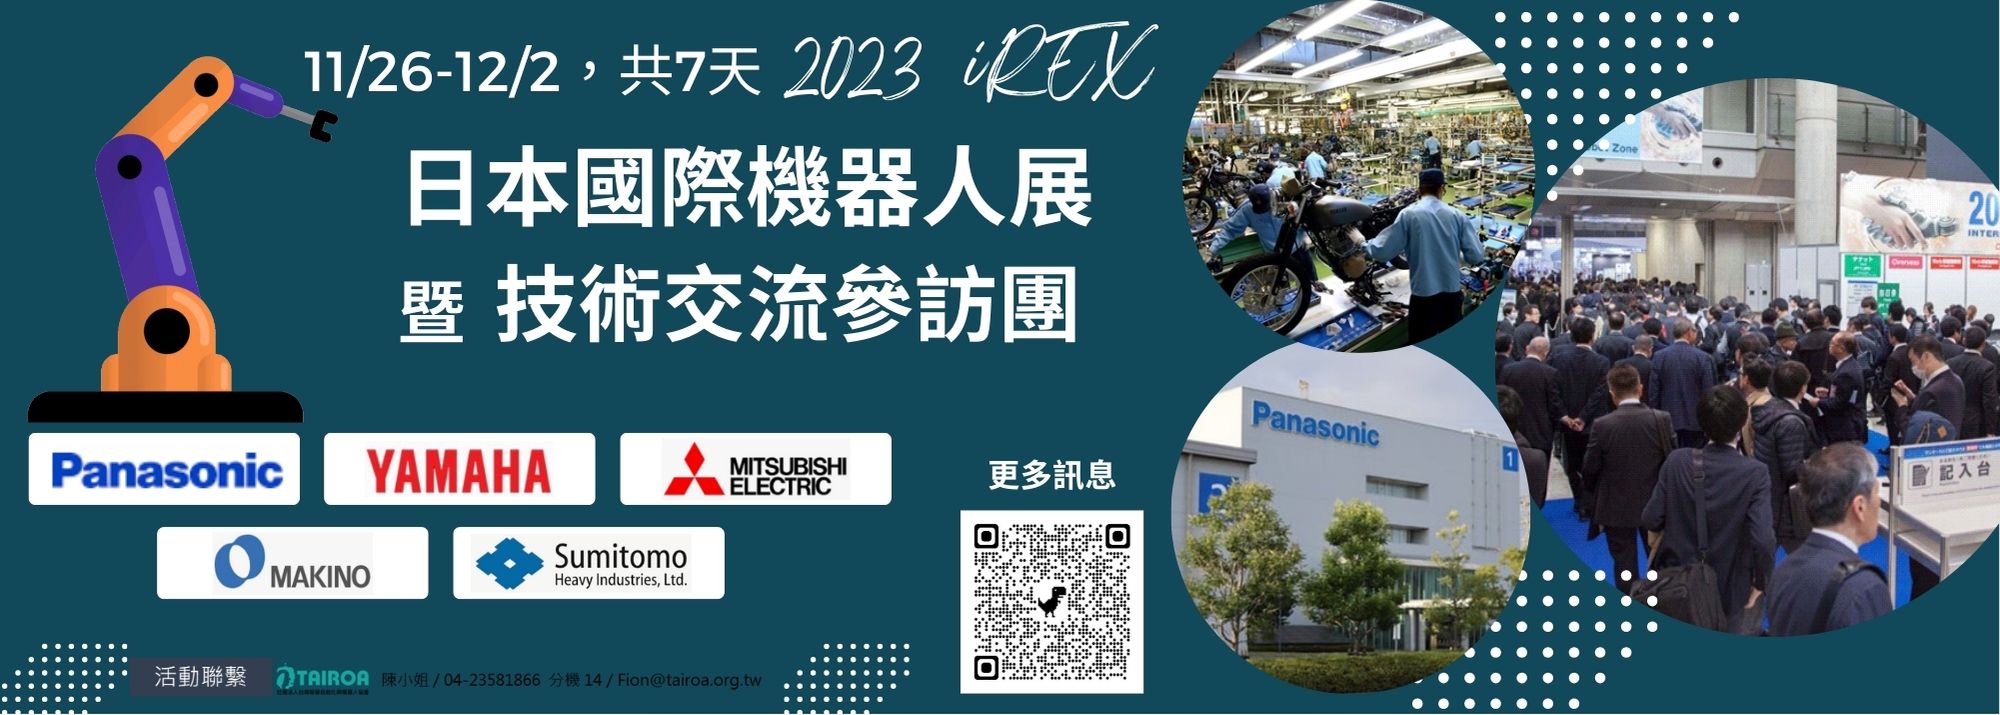 【TAIROA】2023 iREX日本國際機器人展暨技術交流參訪團